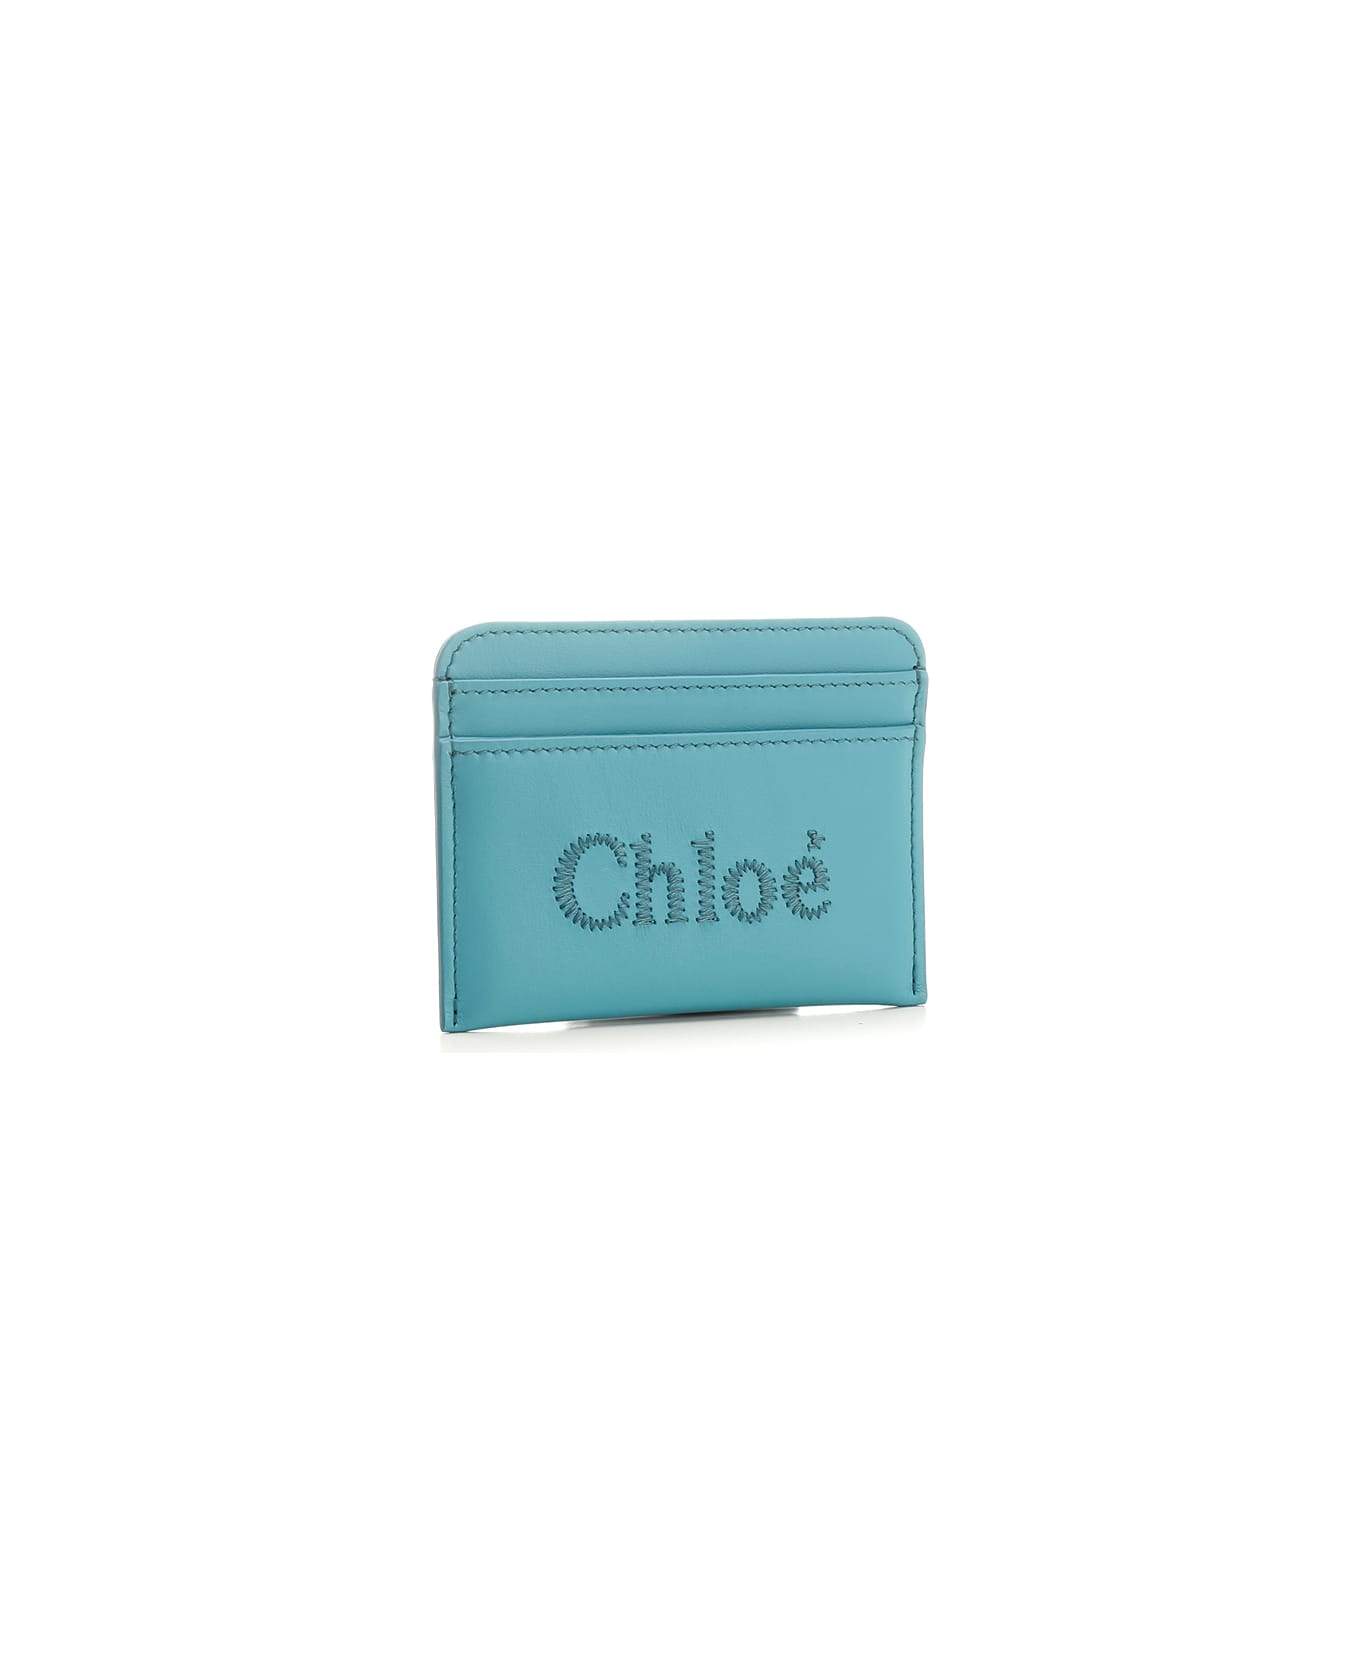 Chloé 'sense' Card Holder - Light blue 財布